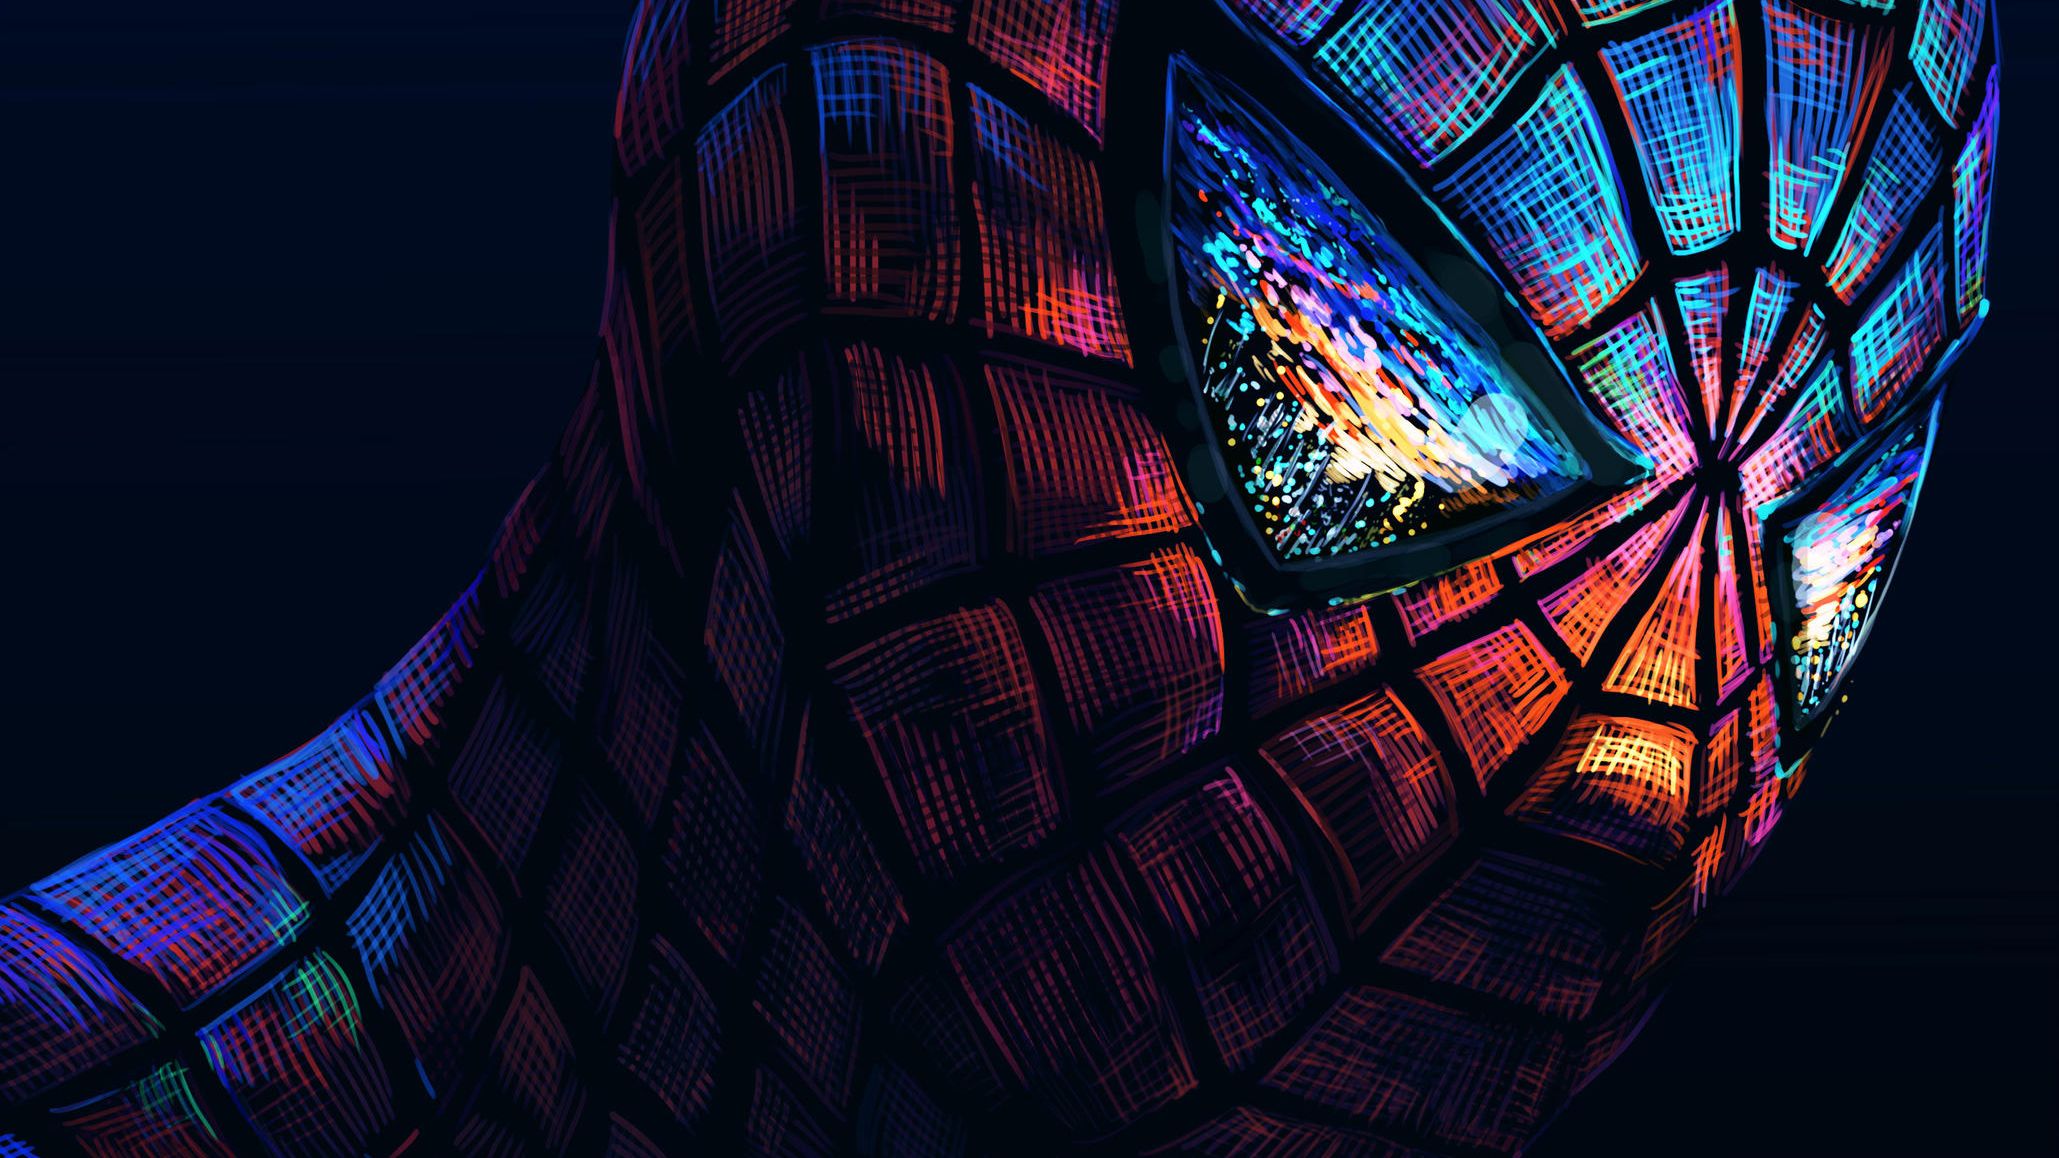 Spiderman Dark Art Macbook Pro Retina HD 4k Wallpaper, Image, Background, Photo and Picture